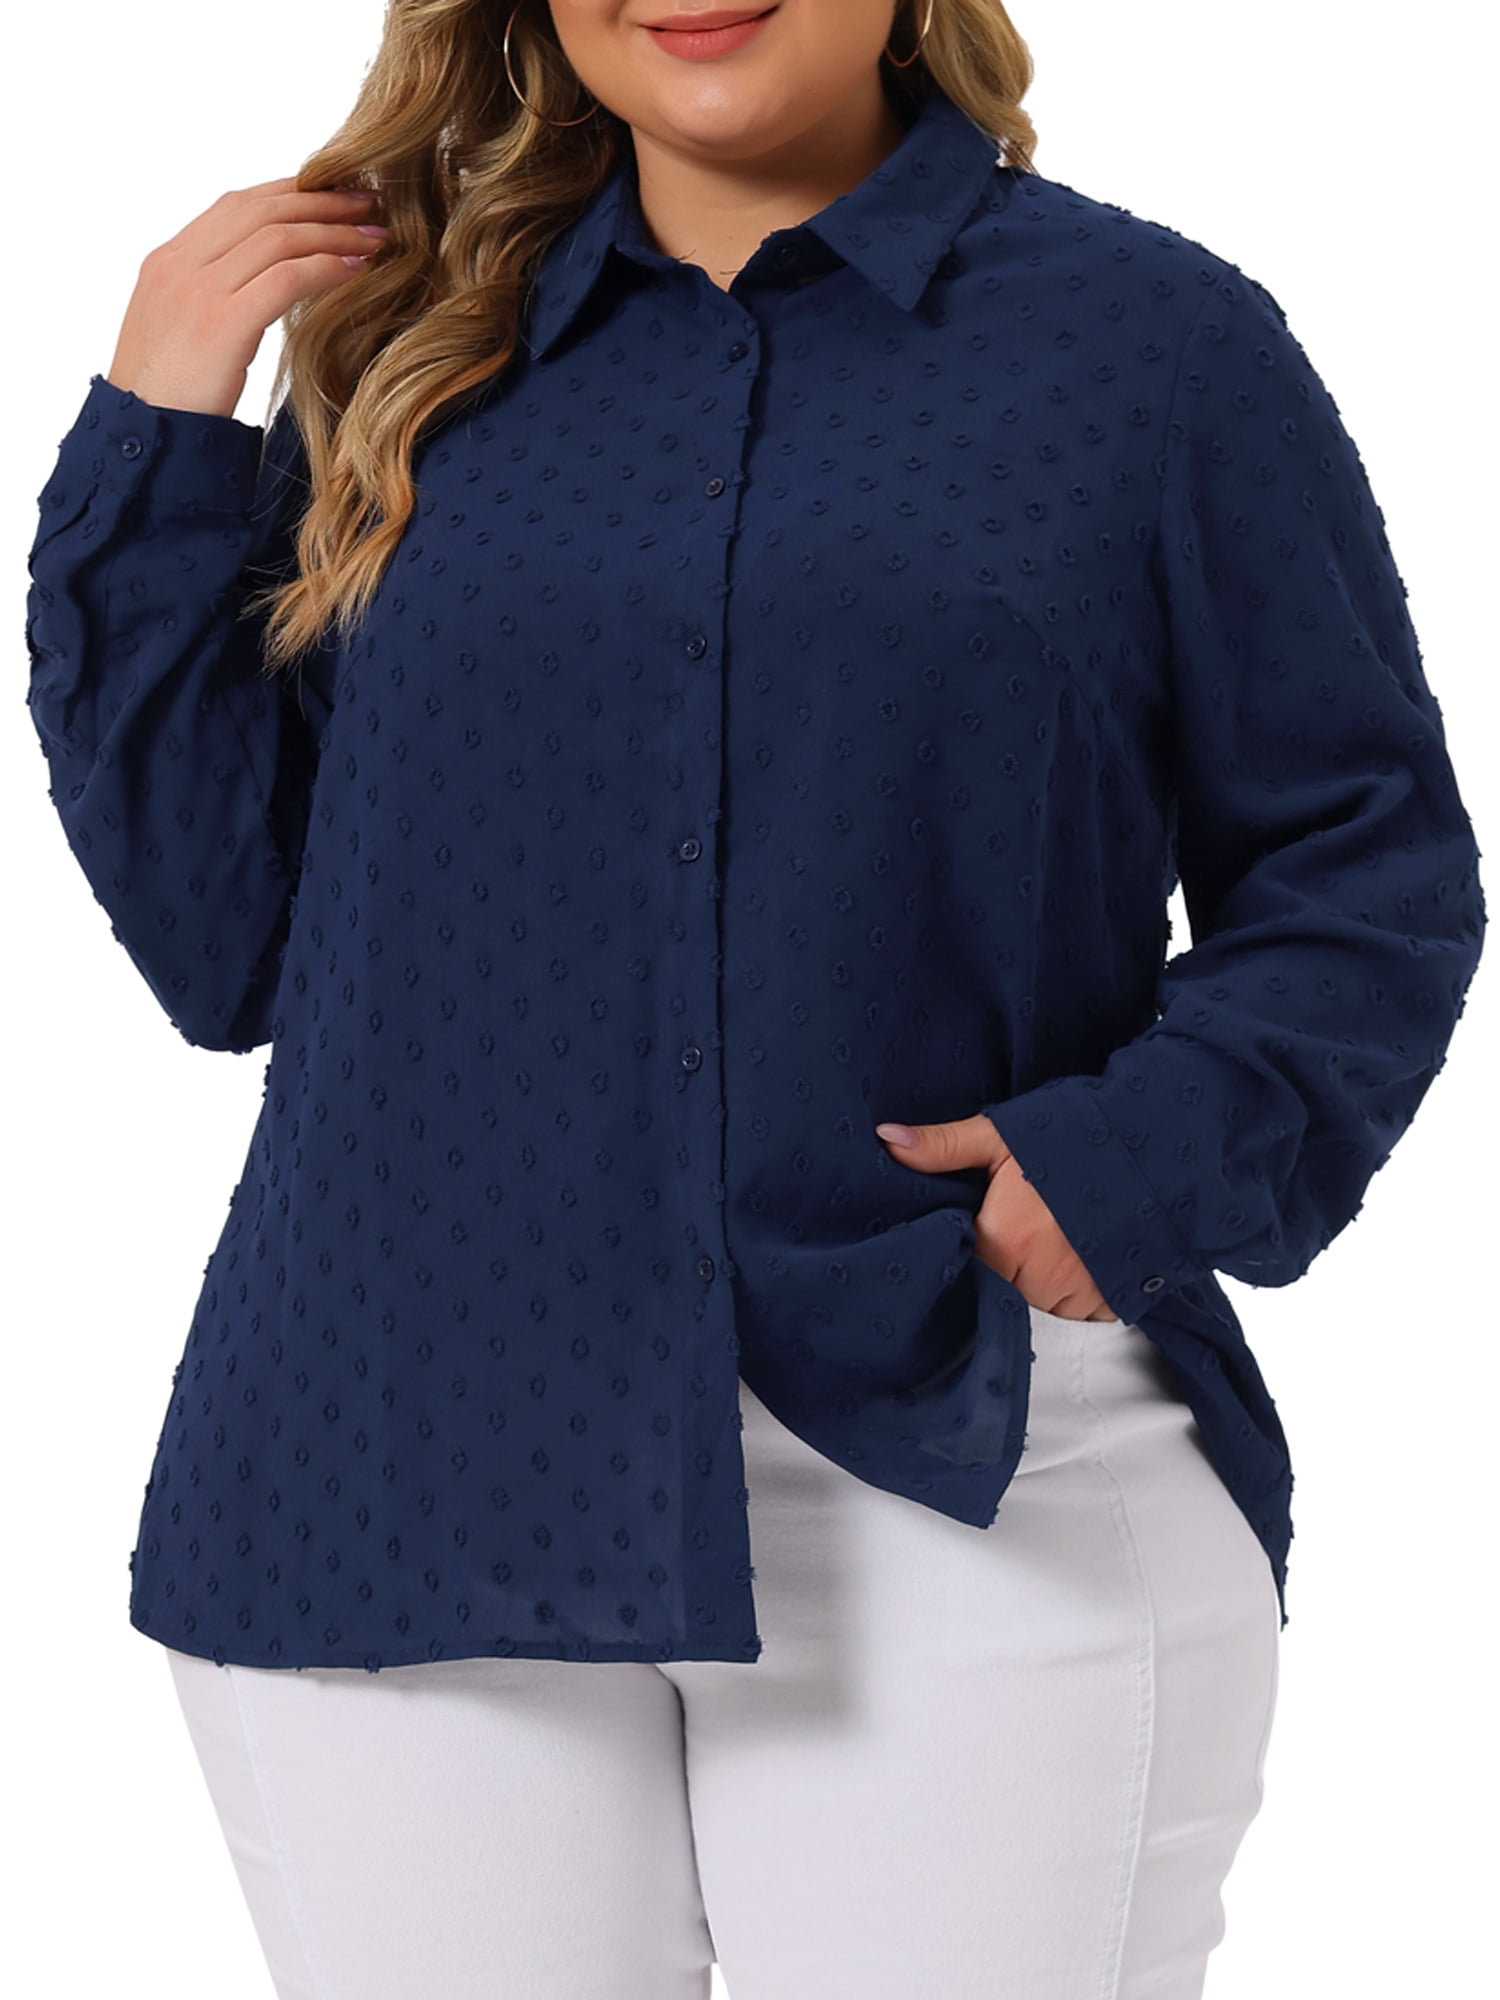 Navy Blue Women Plus Sizes Tops Tees Shirts - Buy Navy Blue Women